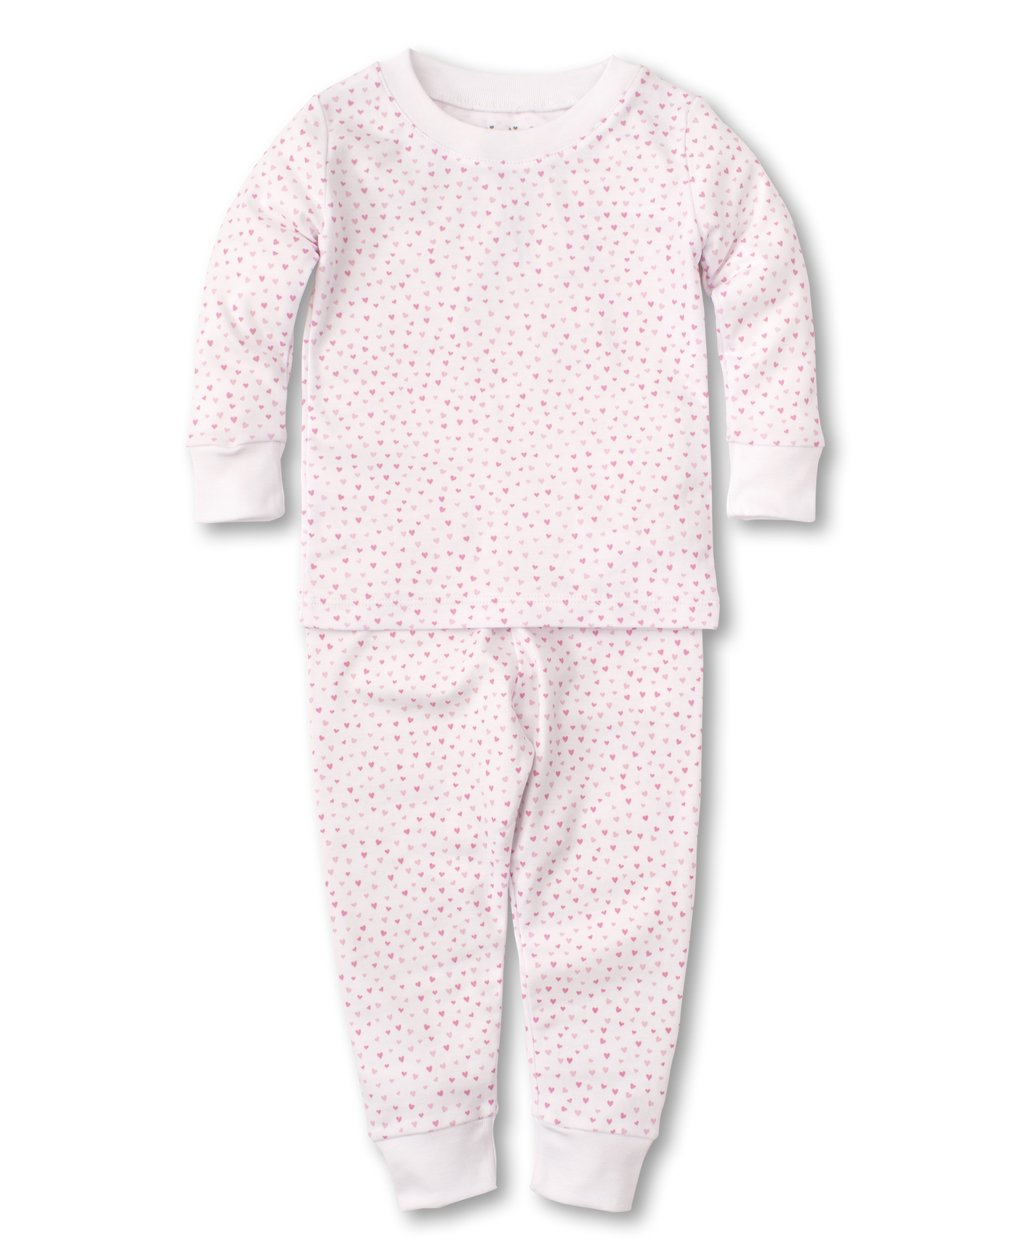 Sweethearts Pajama Set - Infant